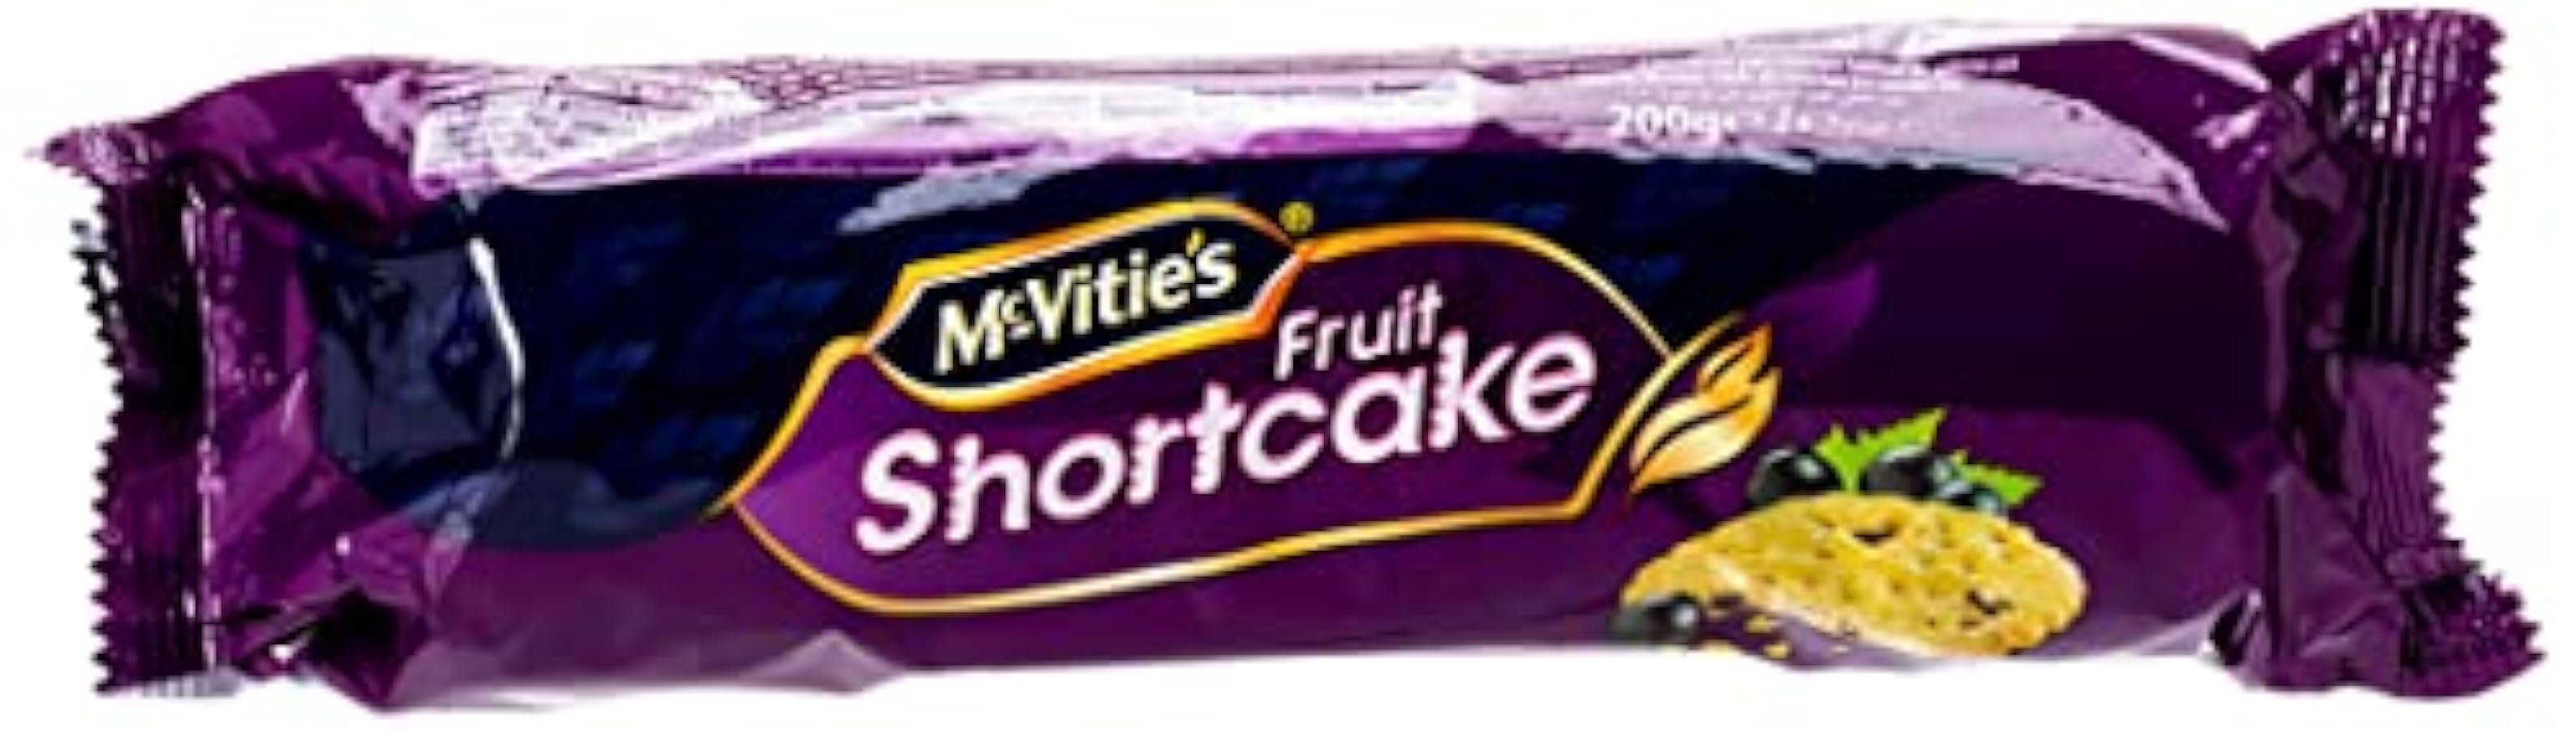 McVities Fruit Short Cake, 200gm (Pack of 12) 873354299